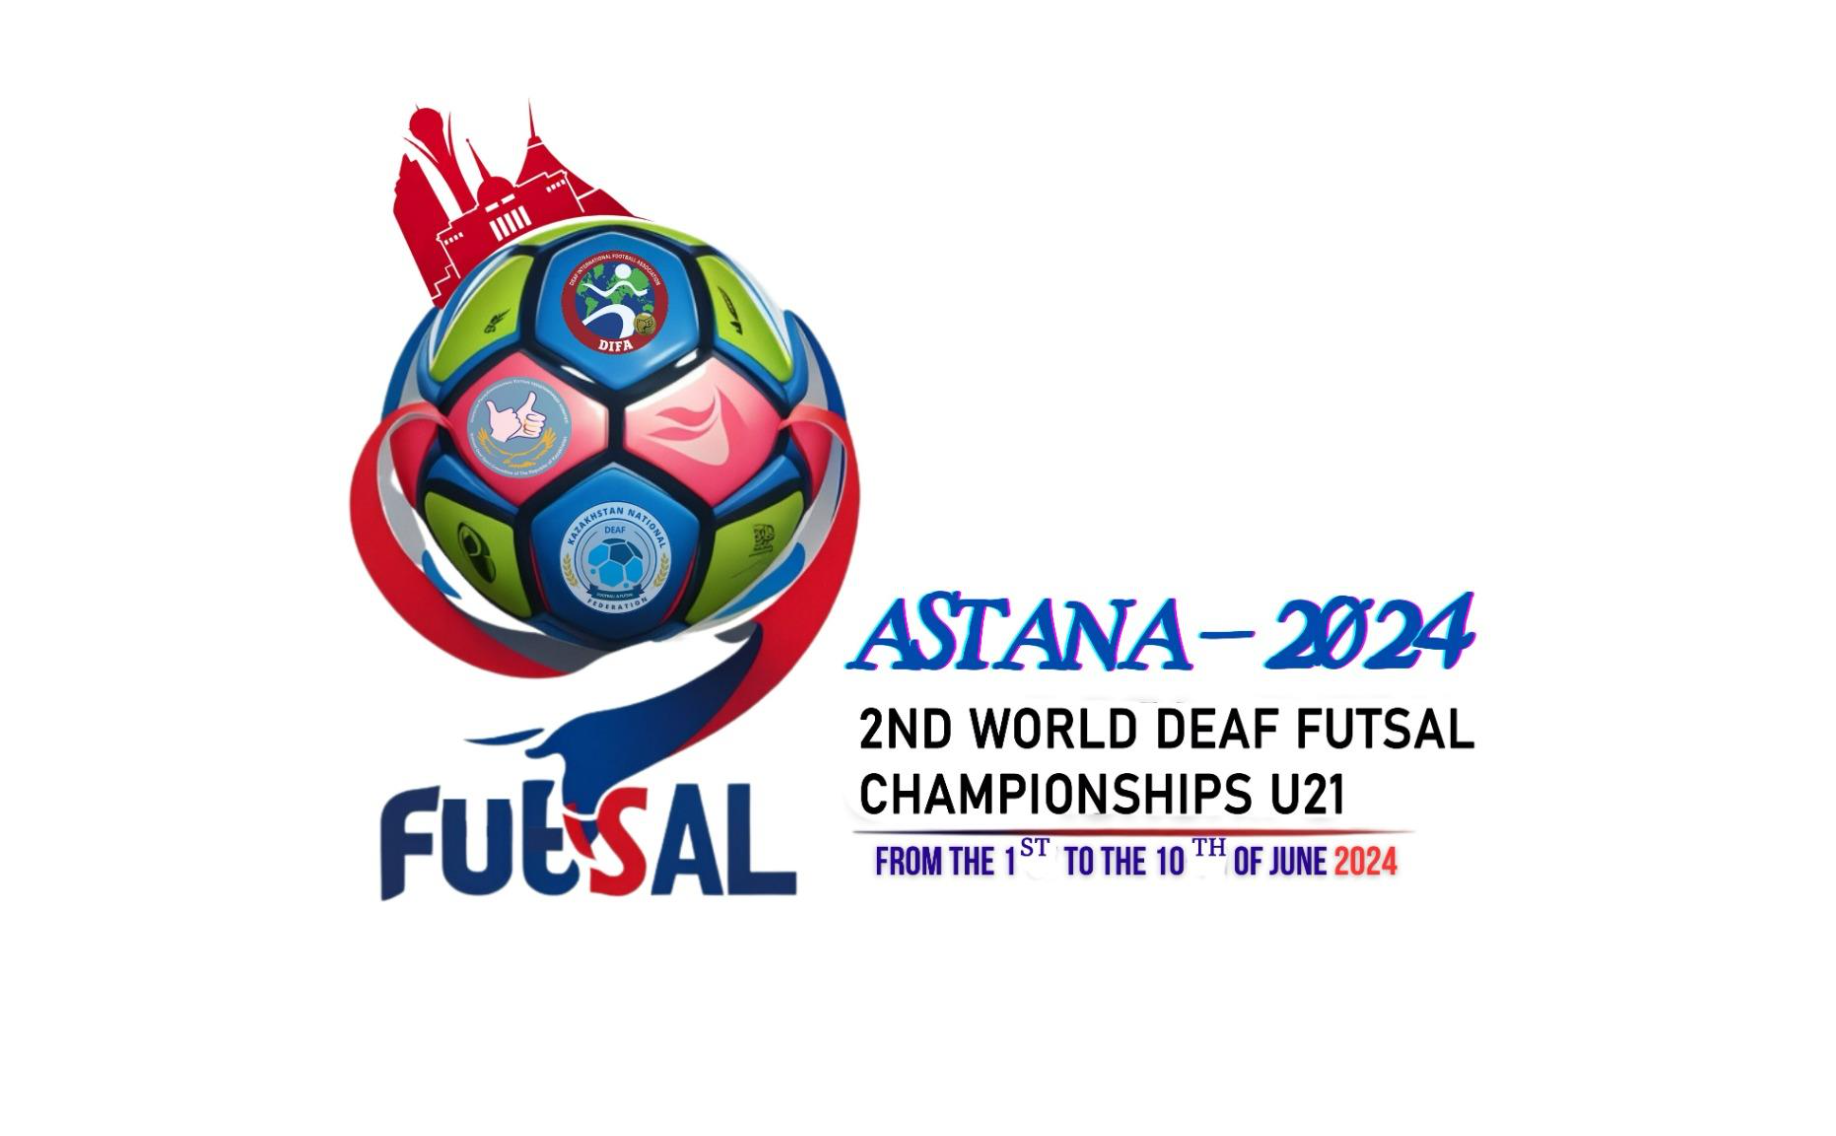 Registration for 2nd World Deaf Futsal Championships U21